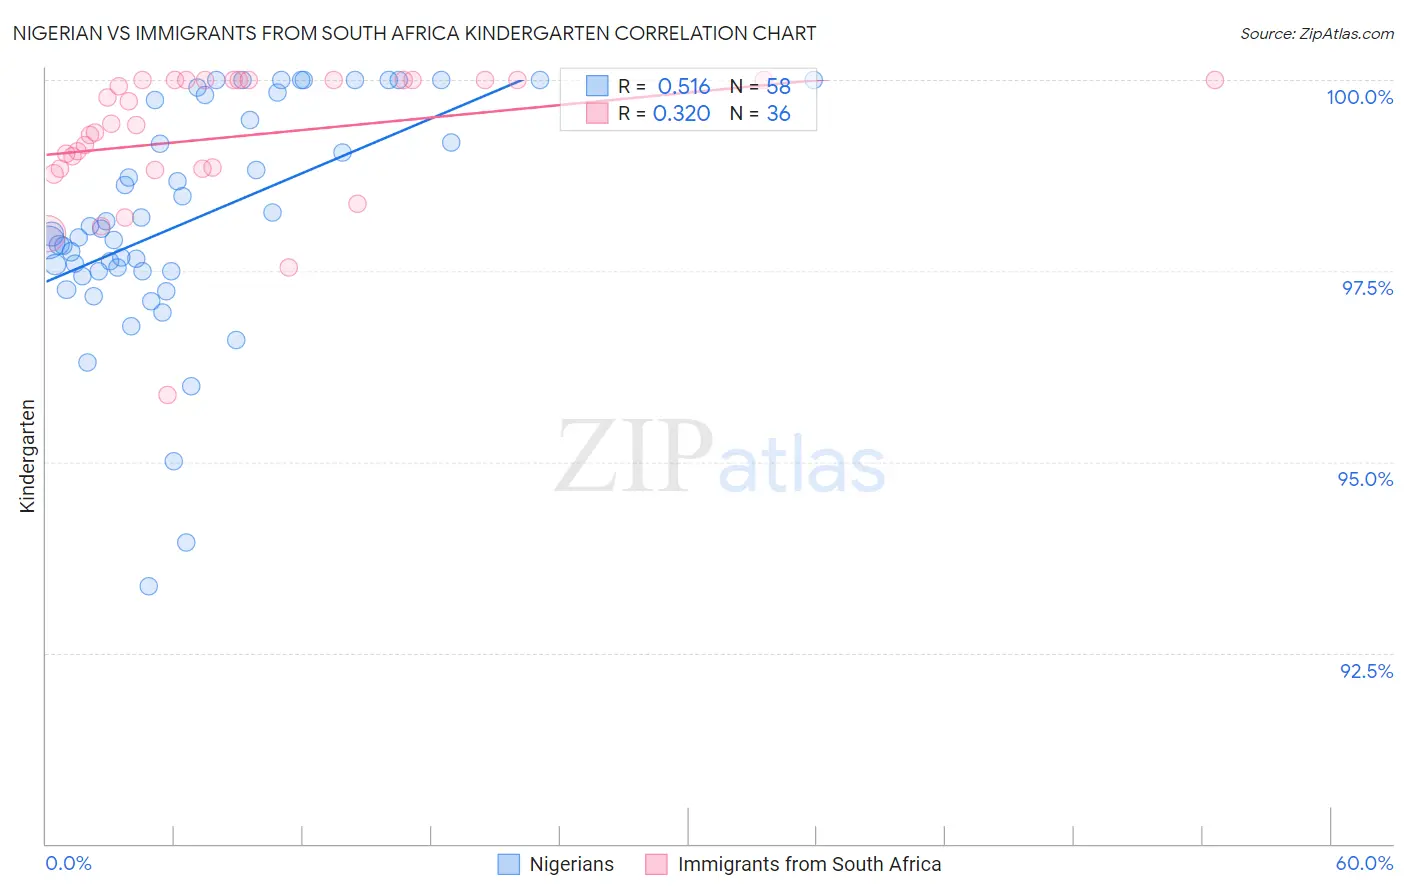 Nigerian vs Immigrants from South Africa Kindergarten